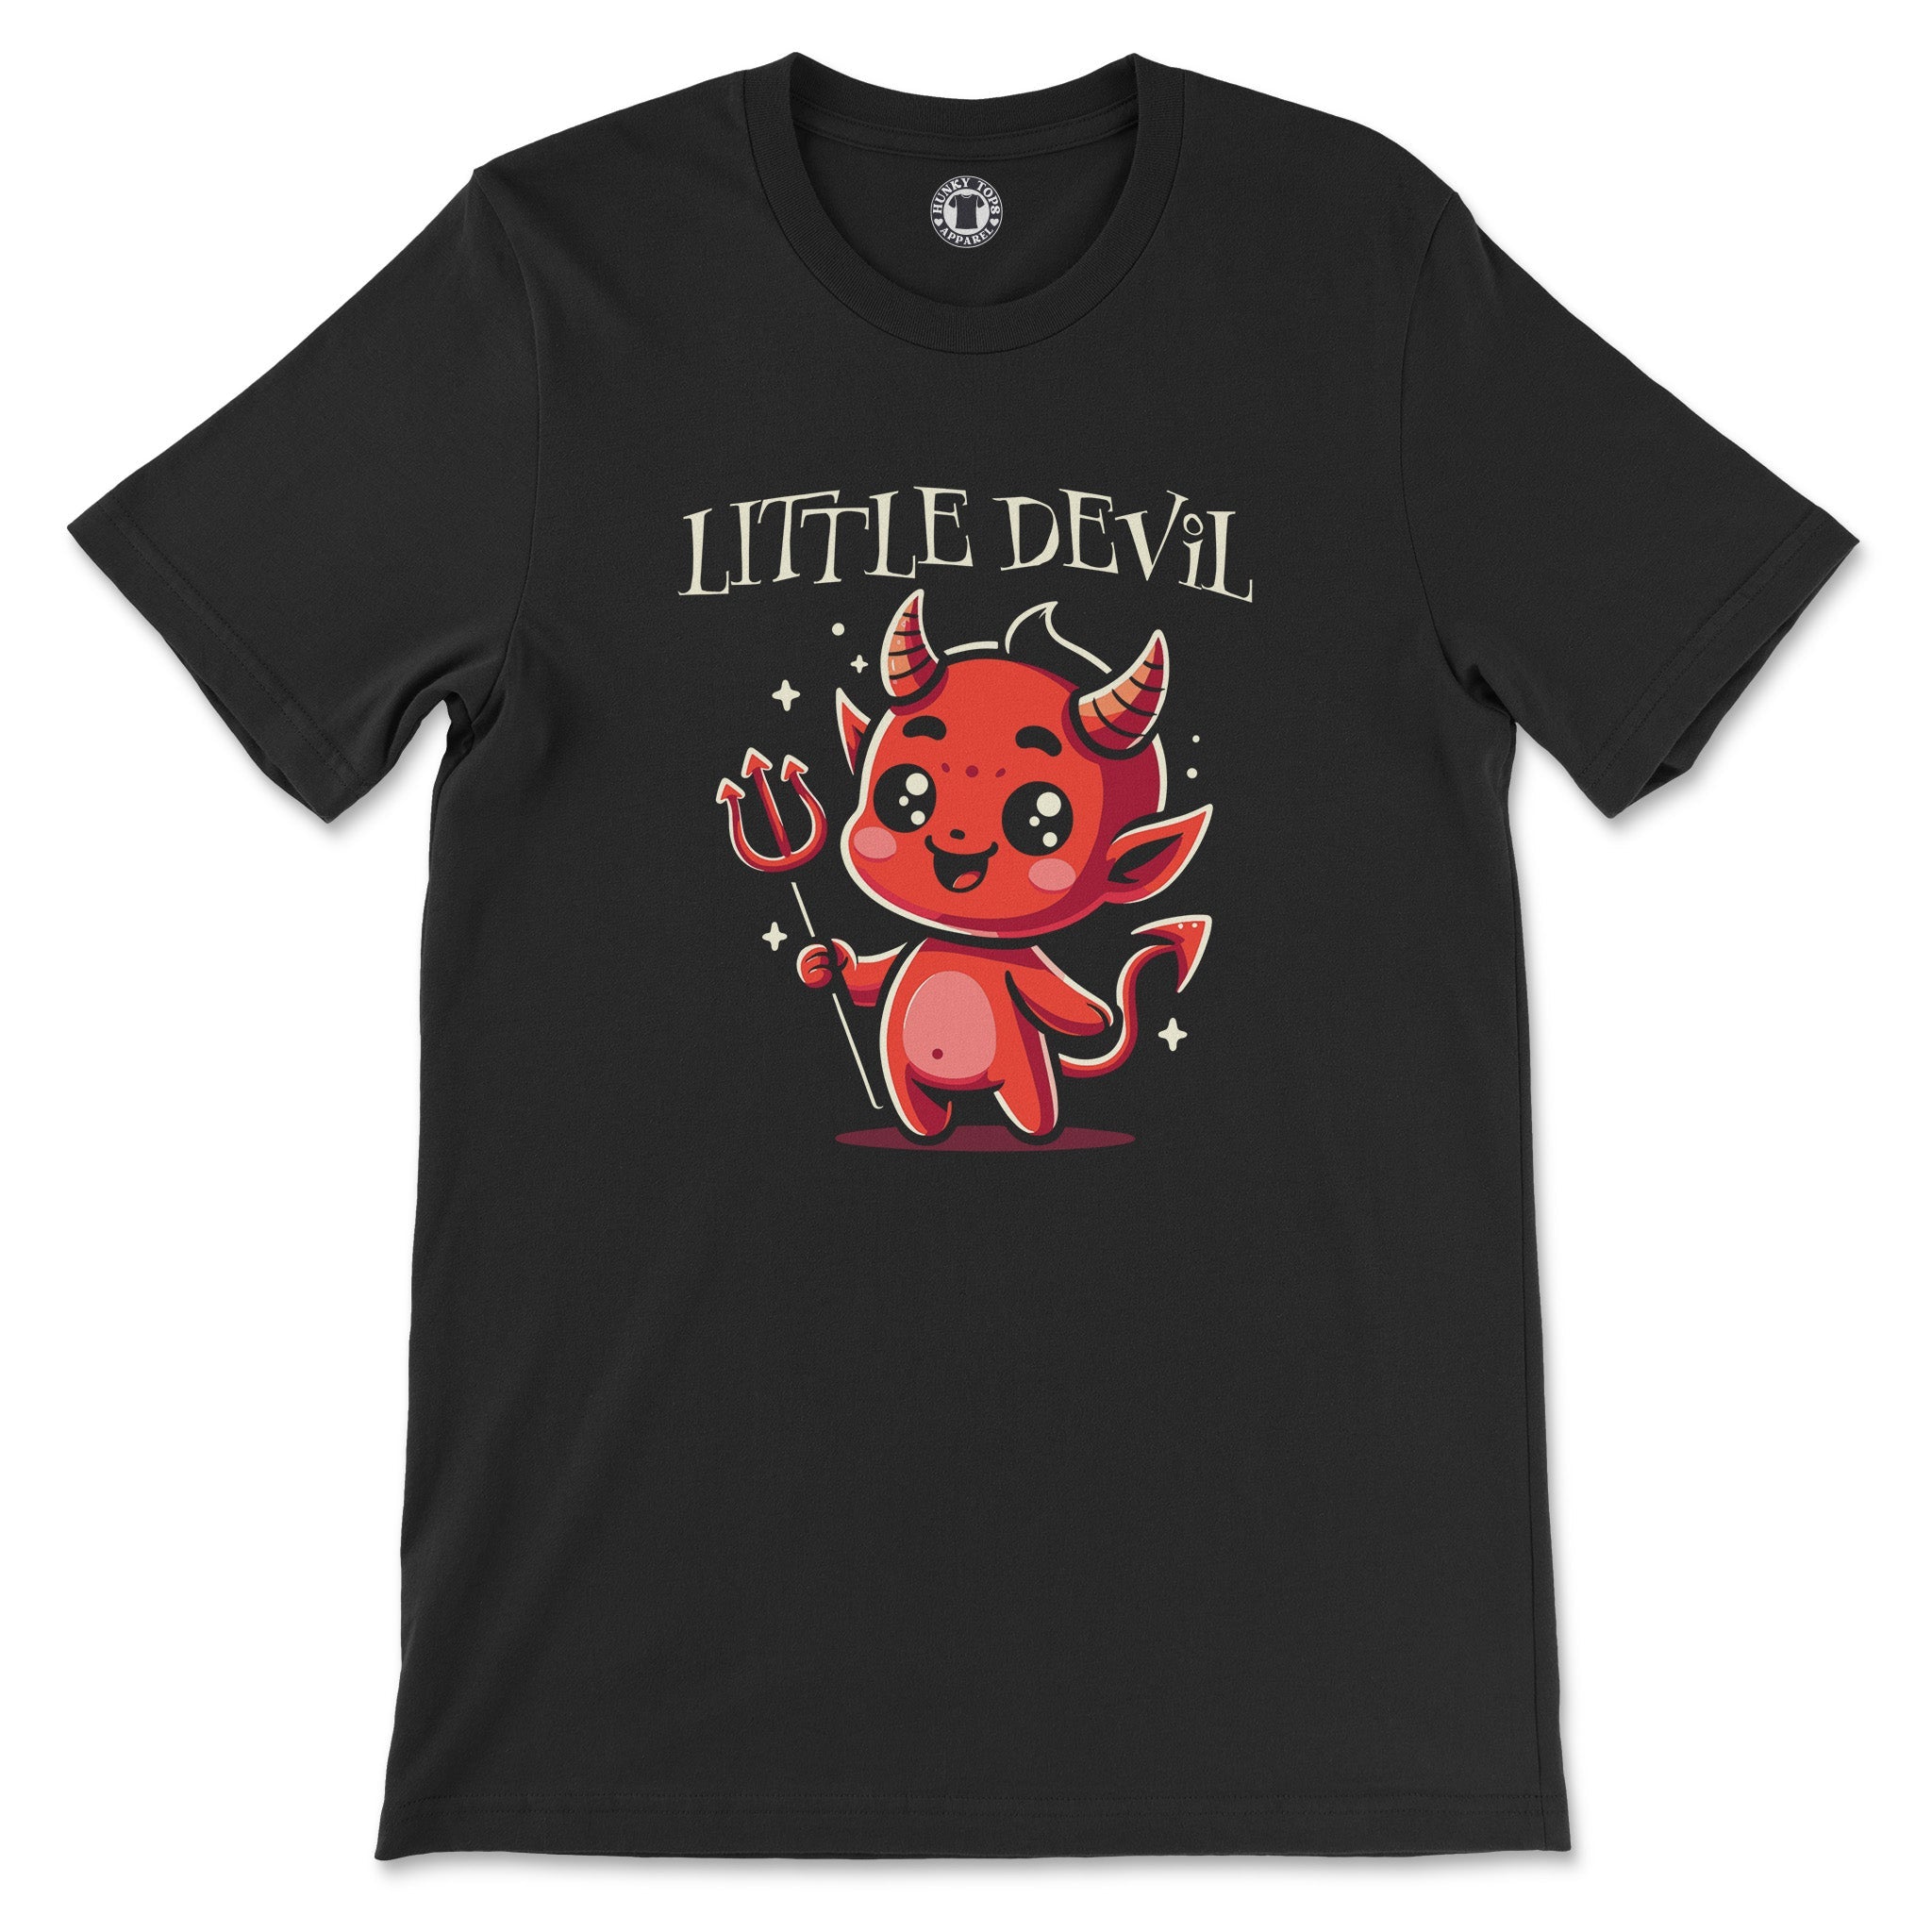 "Little Devil" Tee - Charming Mischief - Hunky Tops